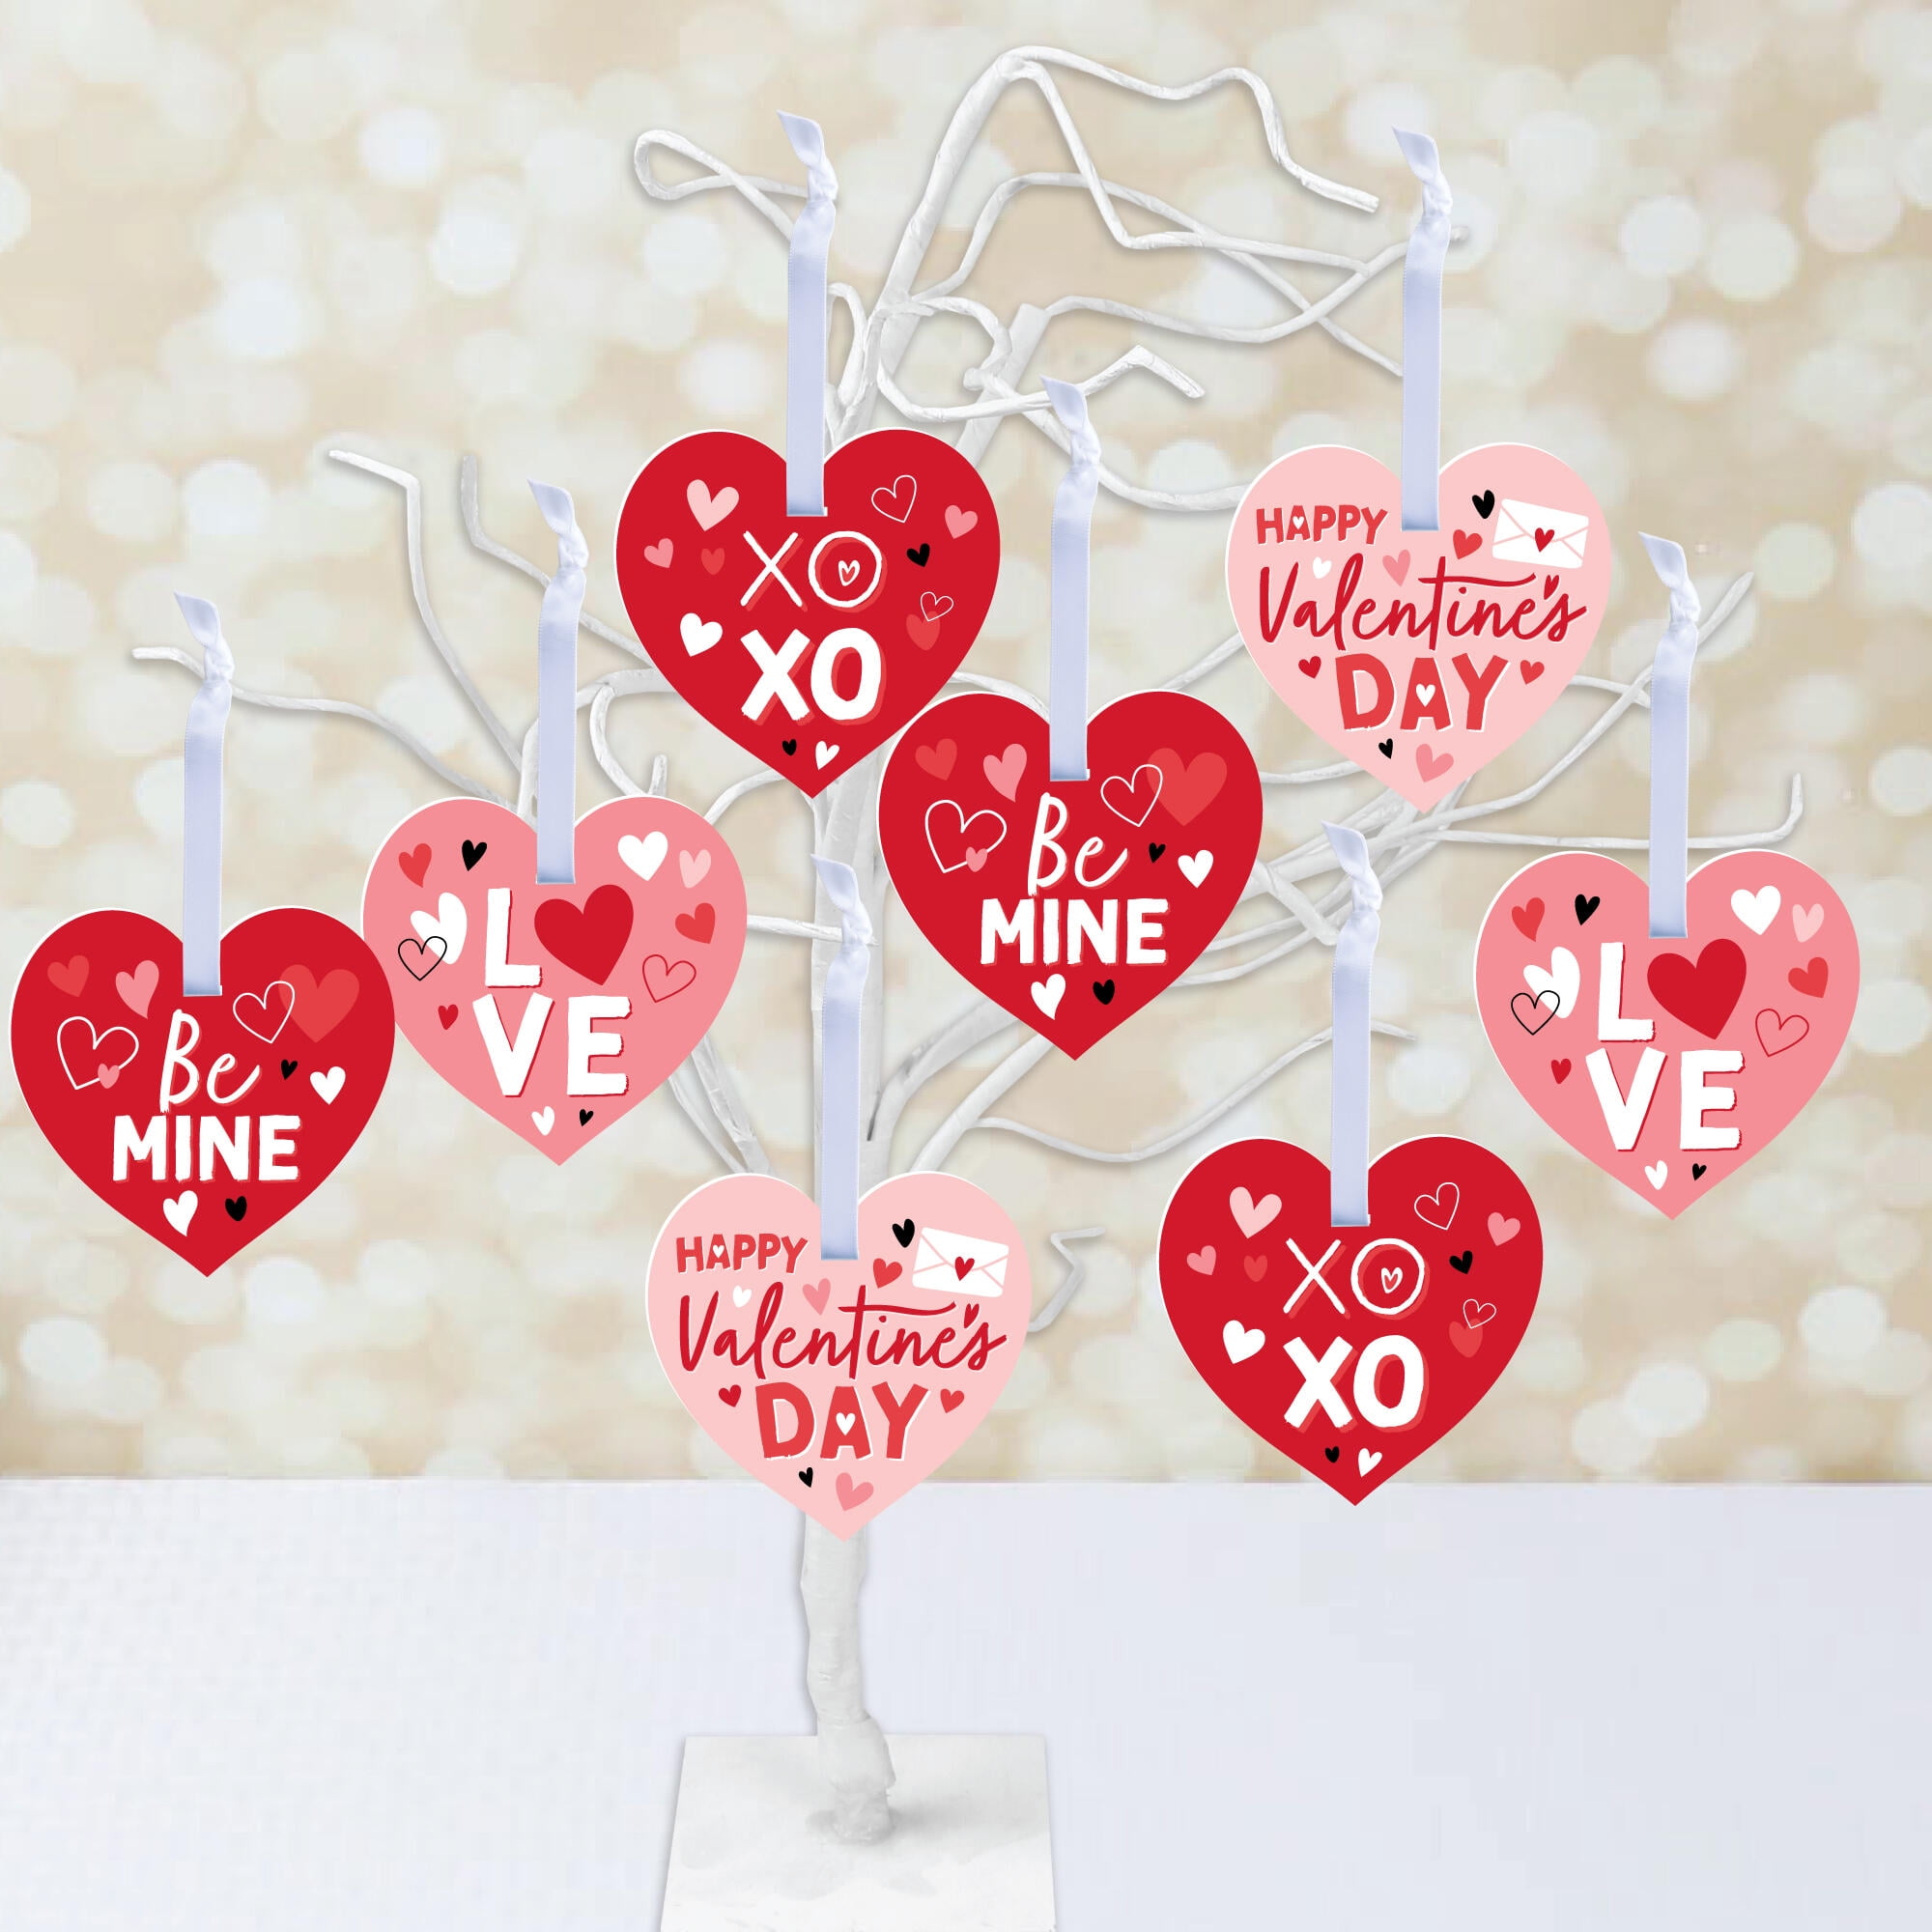 Cheap & Cheerful Valentine's Day Decorations - Nurturing Family & Self